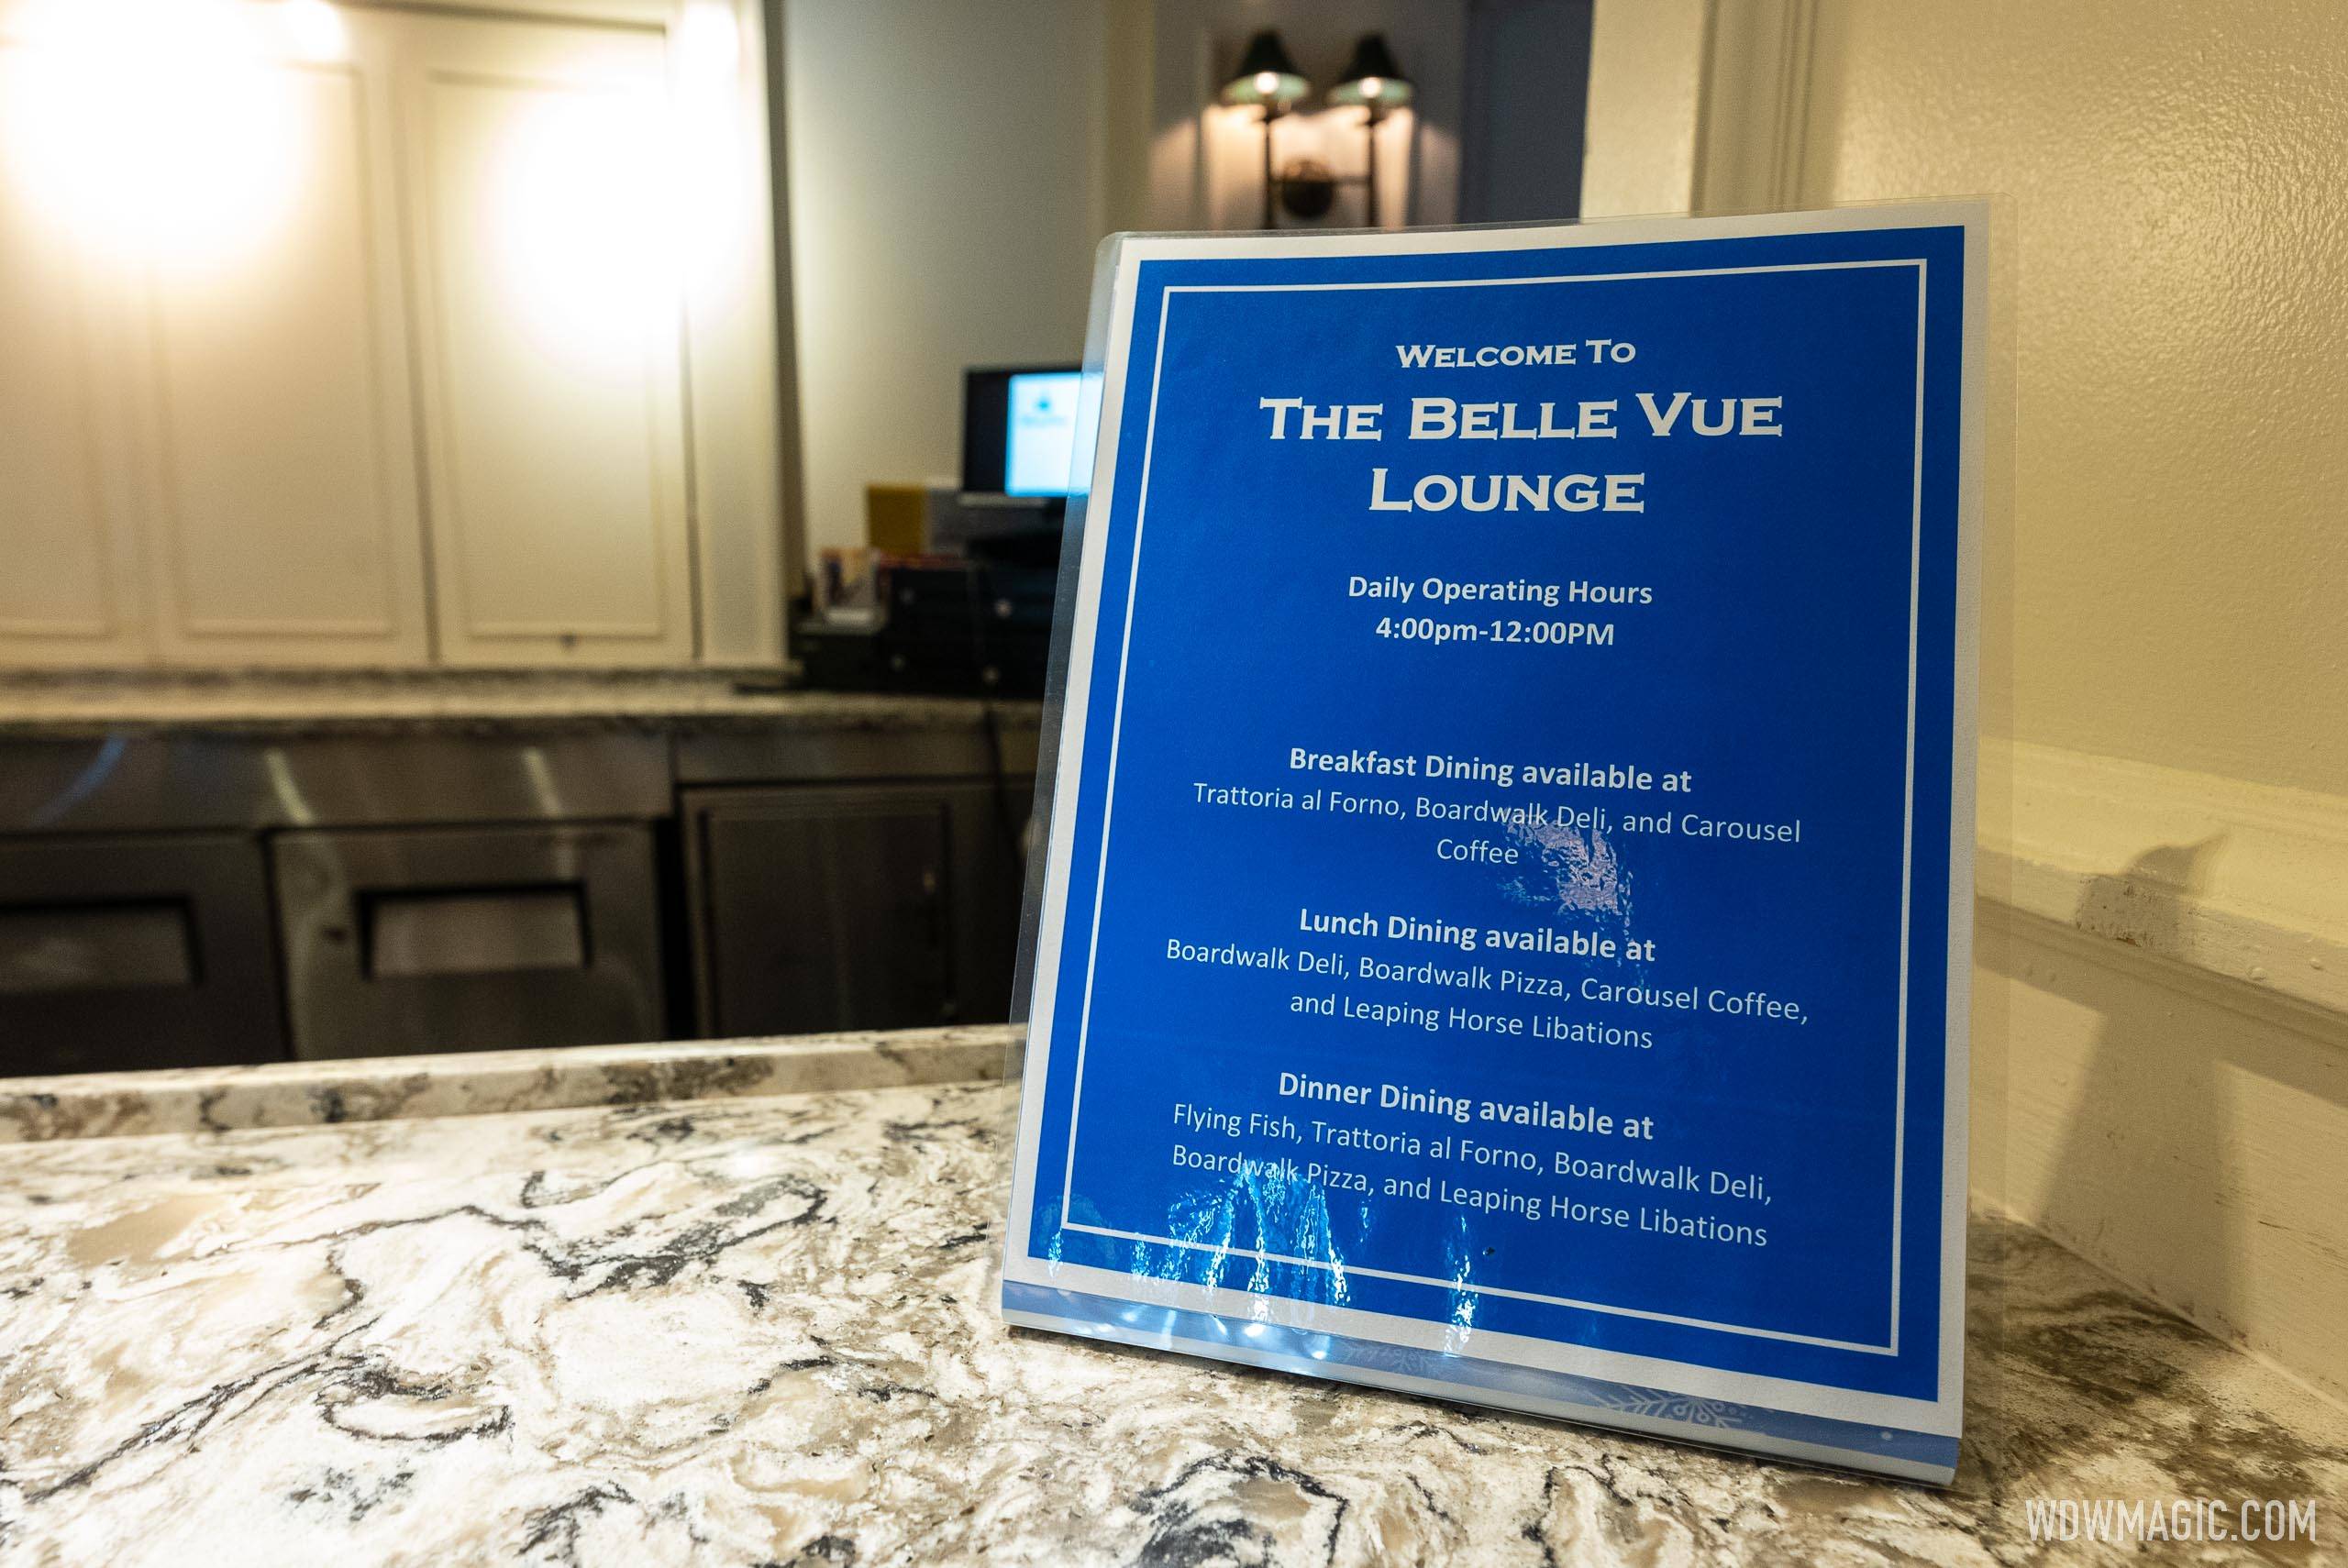 Belle Vue Lounge at Disney's BoardWalk no longer serves breakfast